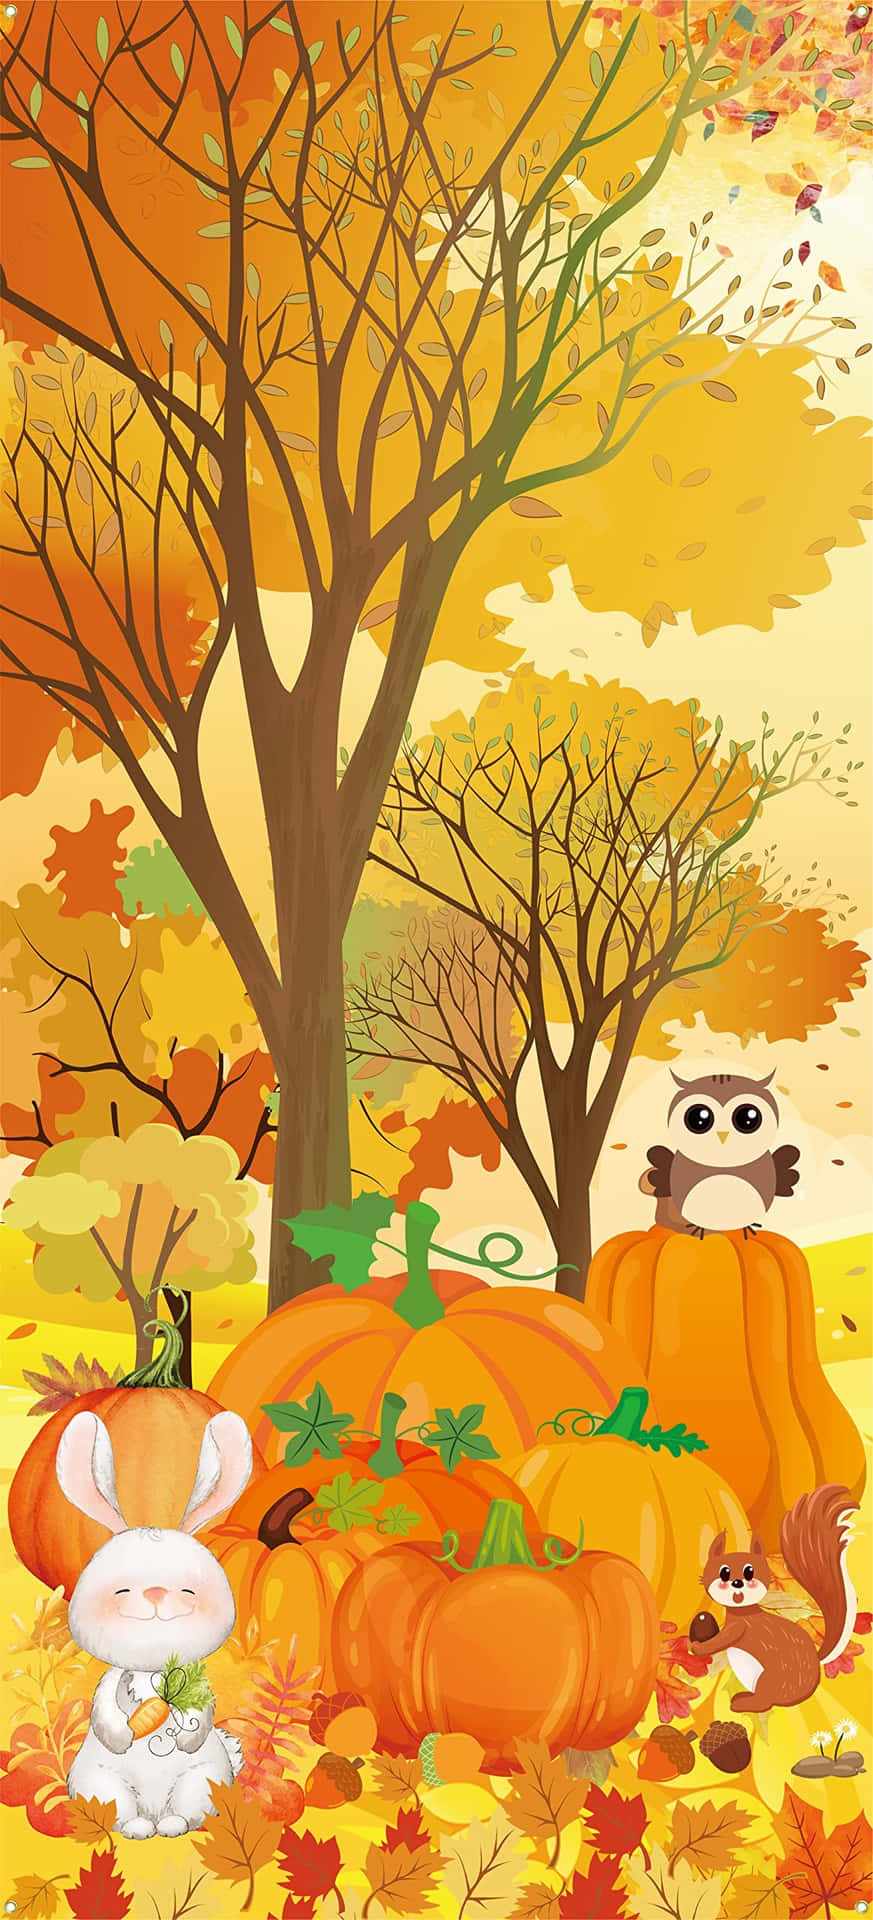 Autumn Forest Creatures Lock Screen Wallpaper